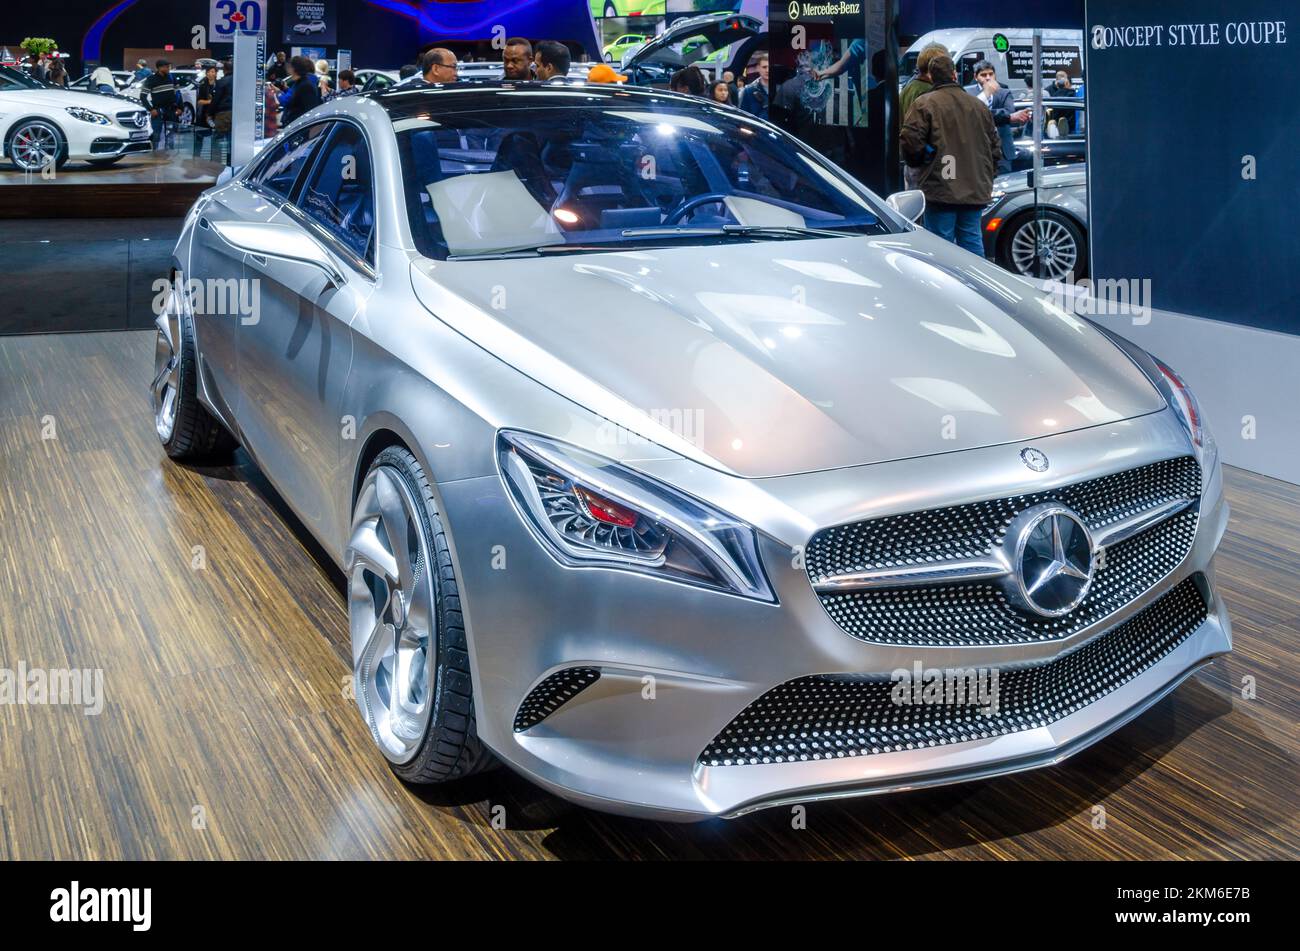 Mercedes Benz Concierto Coupe Foto de stock